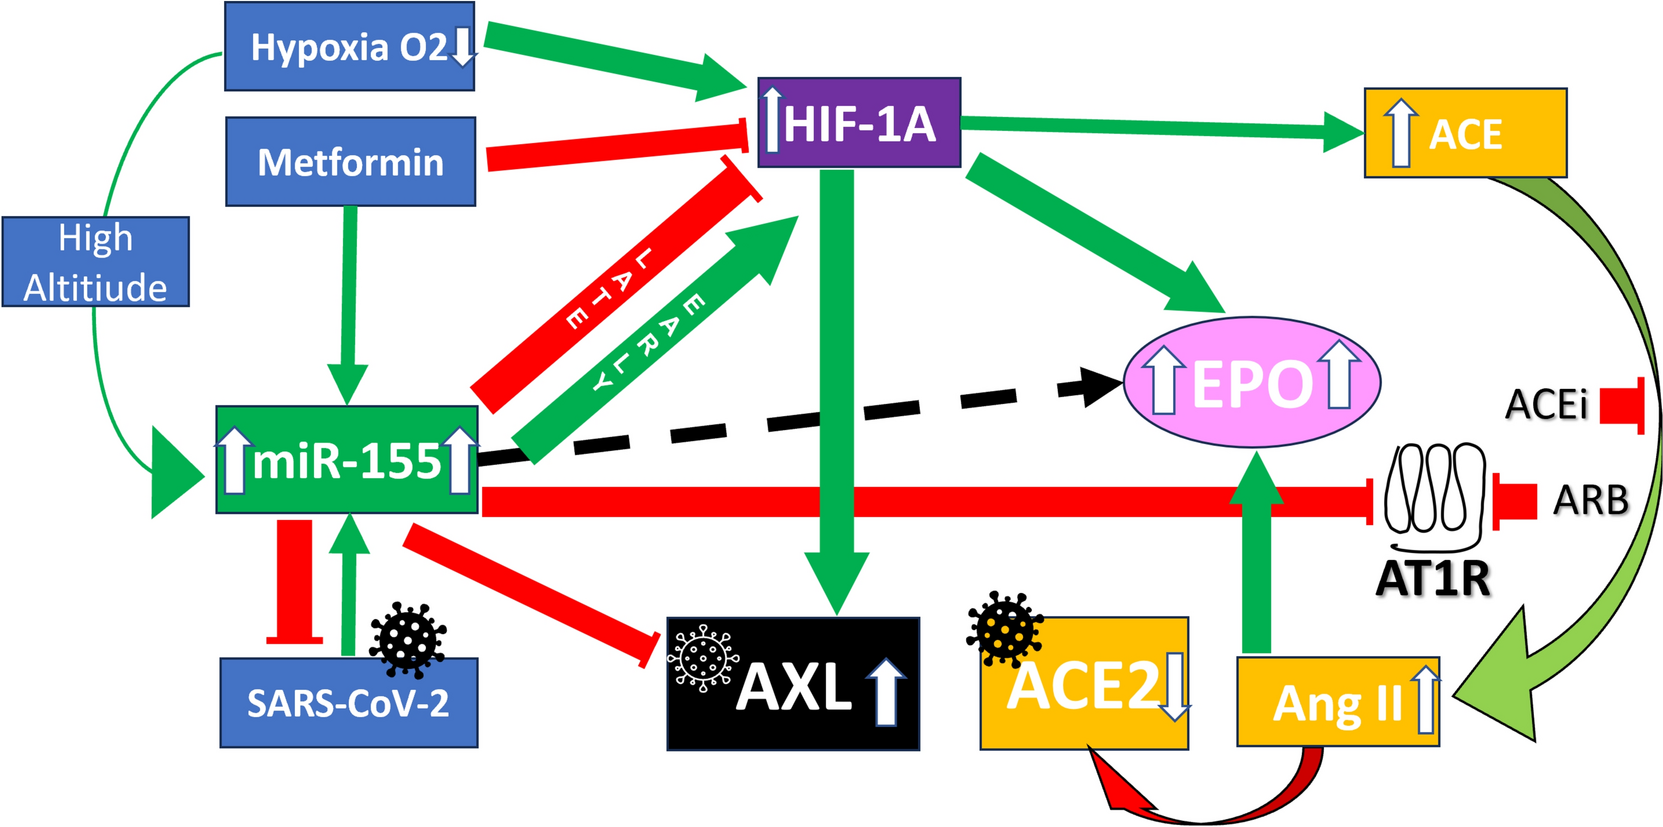 Anexelekto (AXL) no more: microRNA-155 (miR-155) controls the “Uncontrolled” in SARS-CoV-2